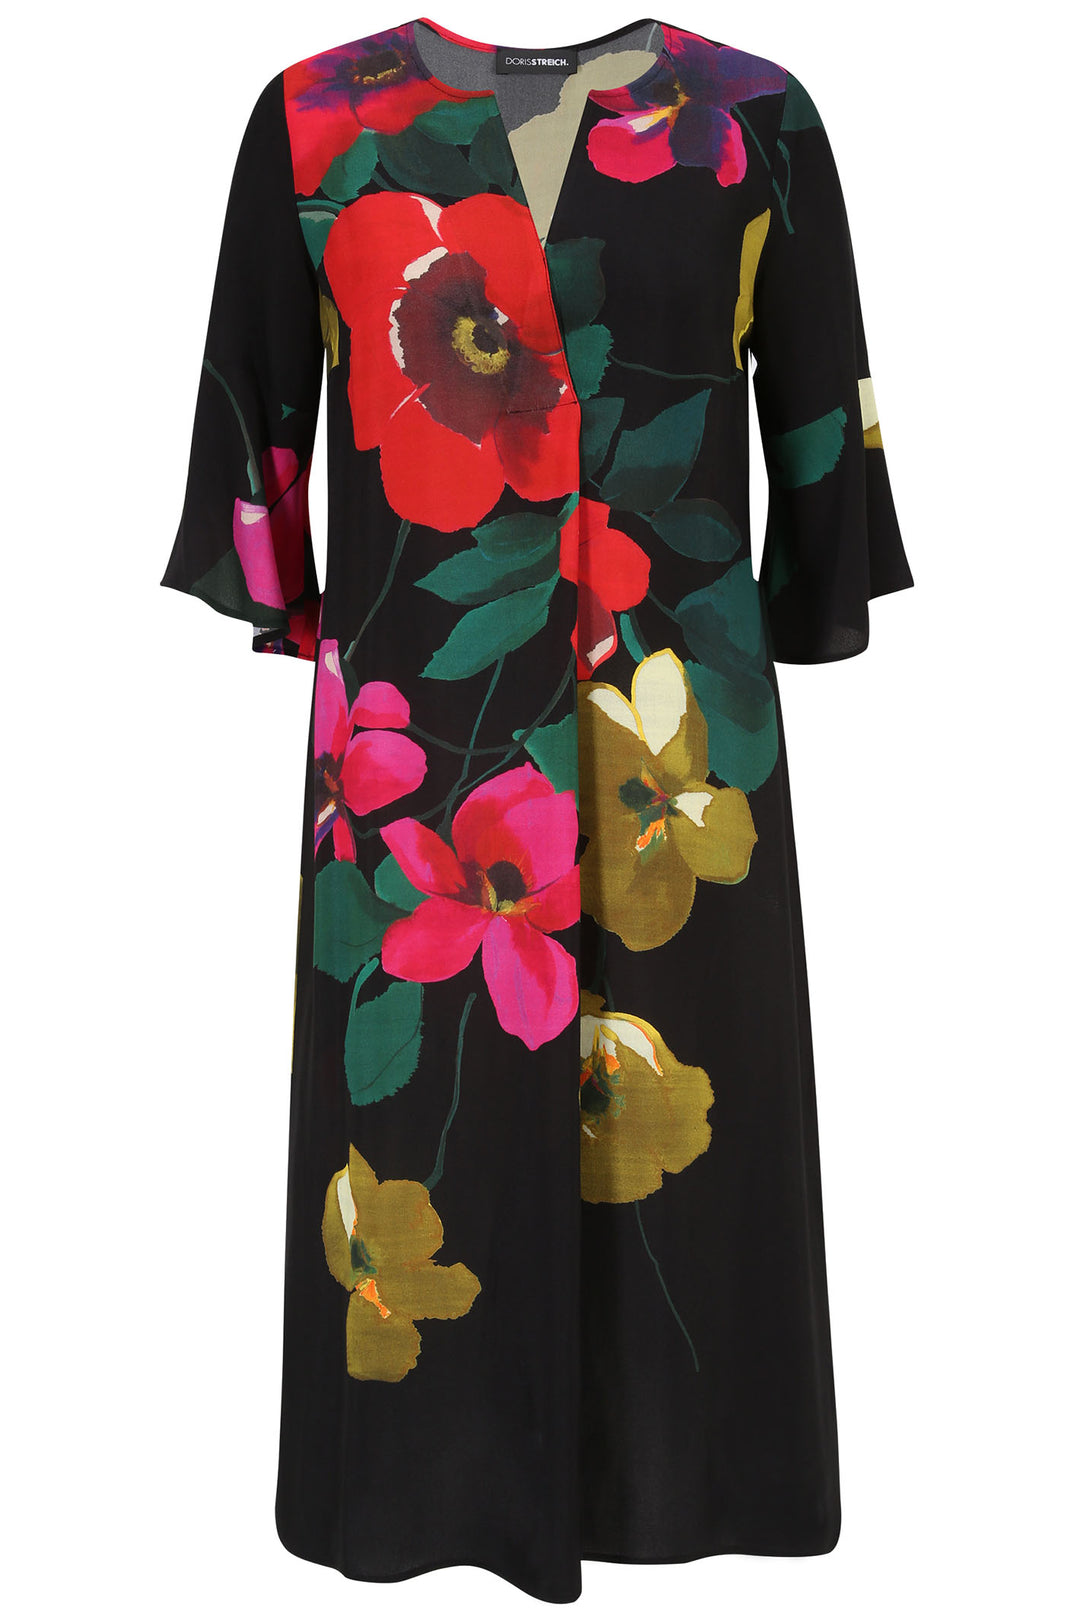 Doris Streich 674346 98 Black Floral Print Dress With Sleeves - Shirley Allum Boutique